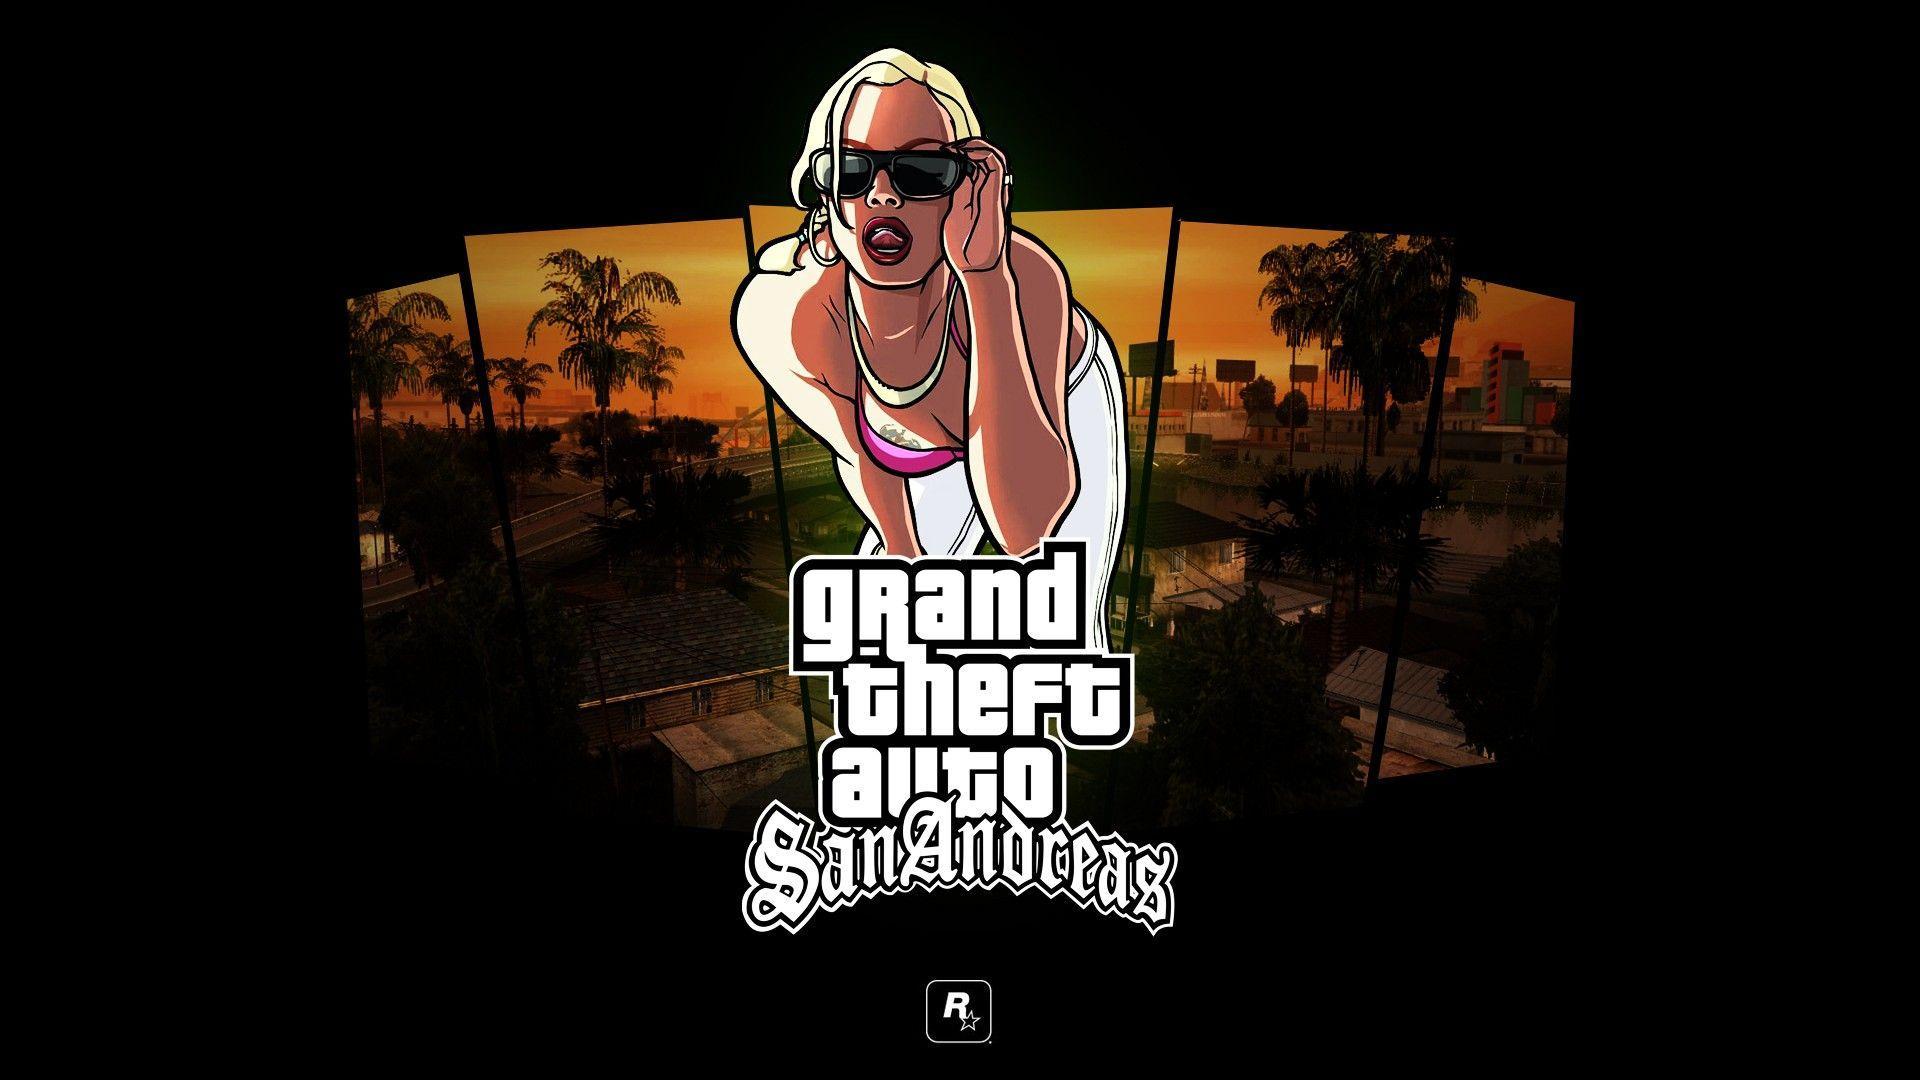 Grand Theft Auto San Andreas, Rockstar Games, Video Games